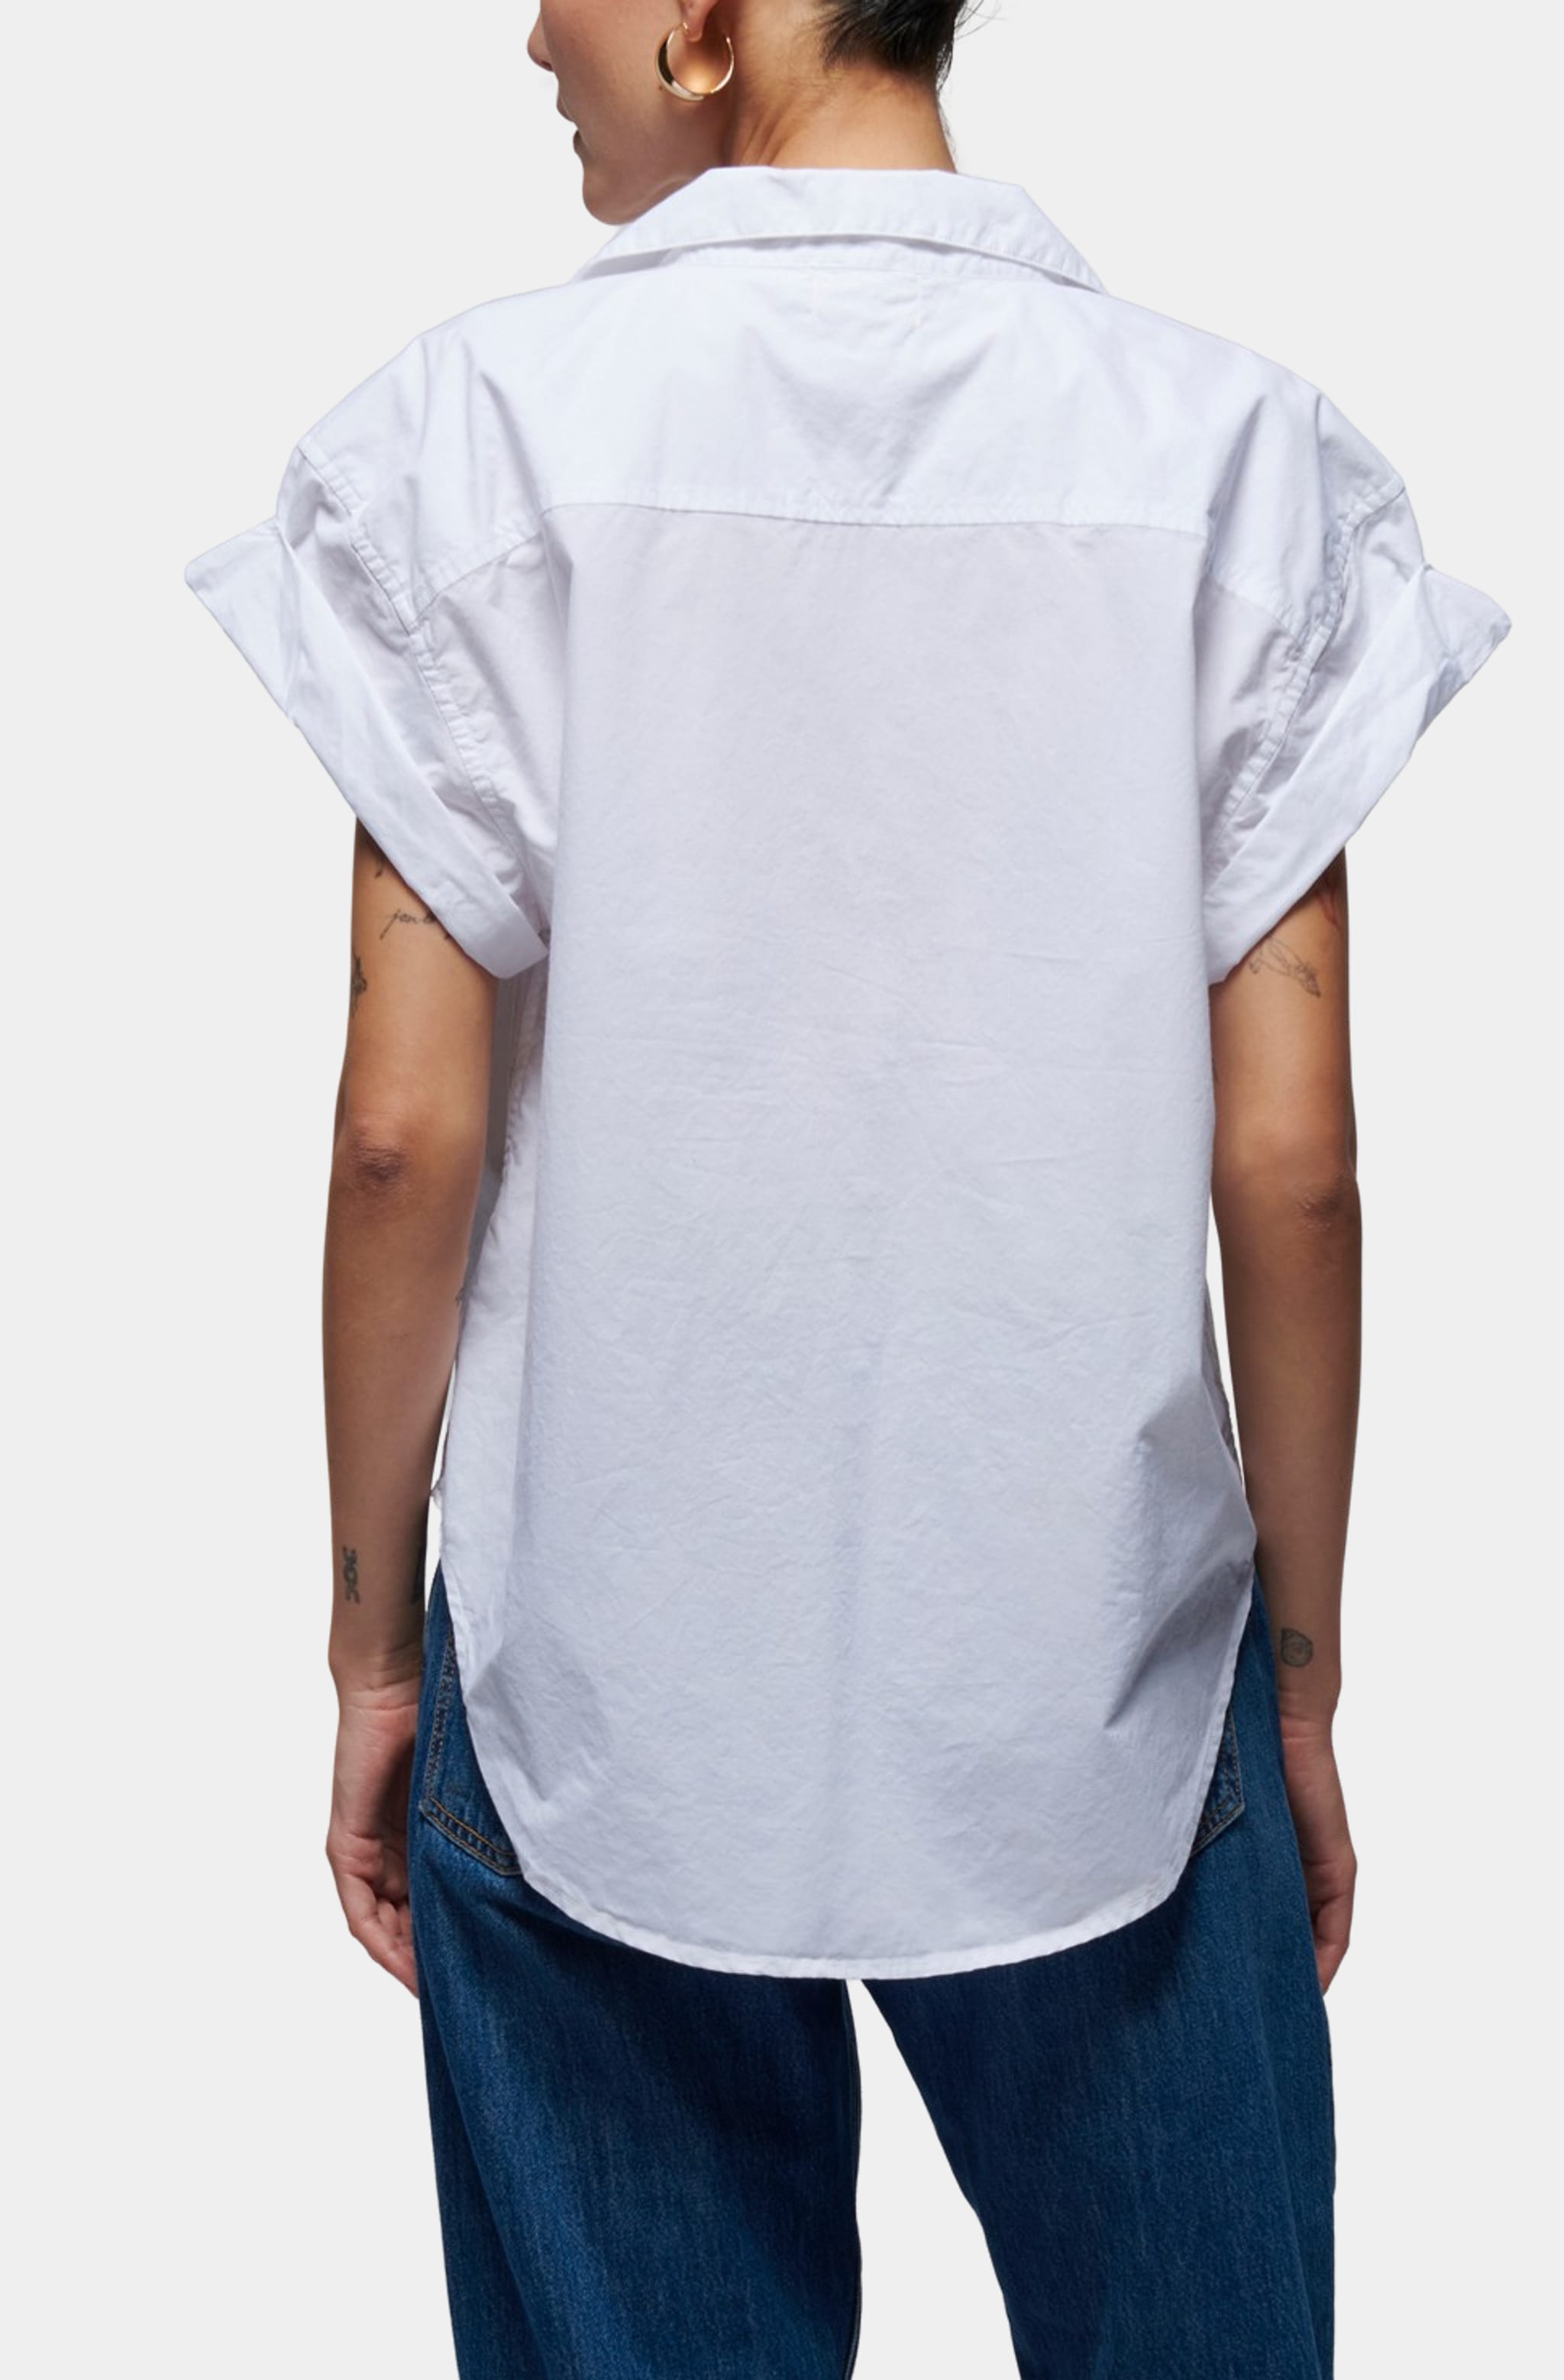 Elliot T-Shirt